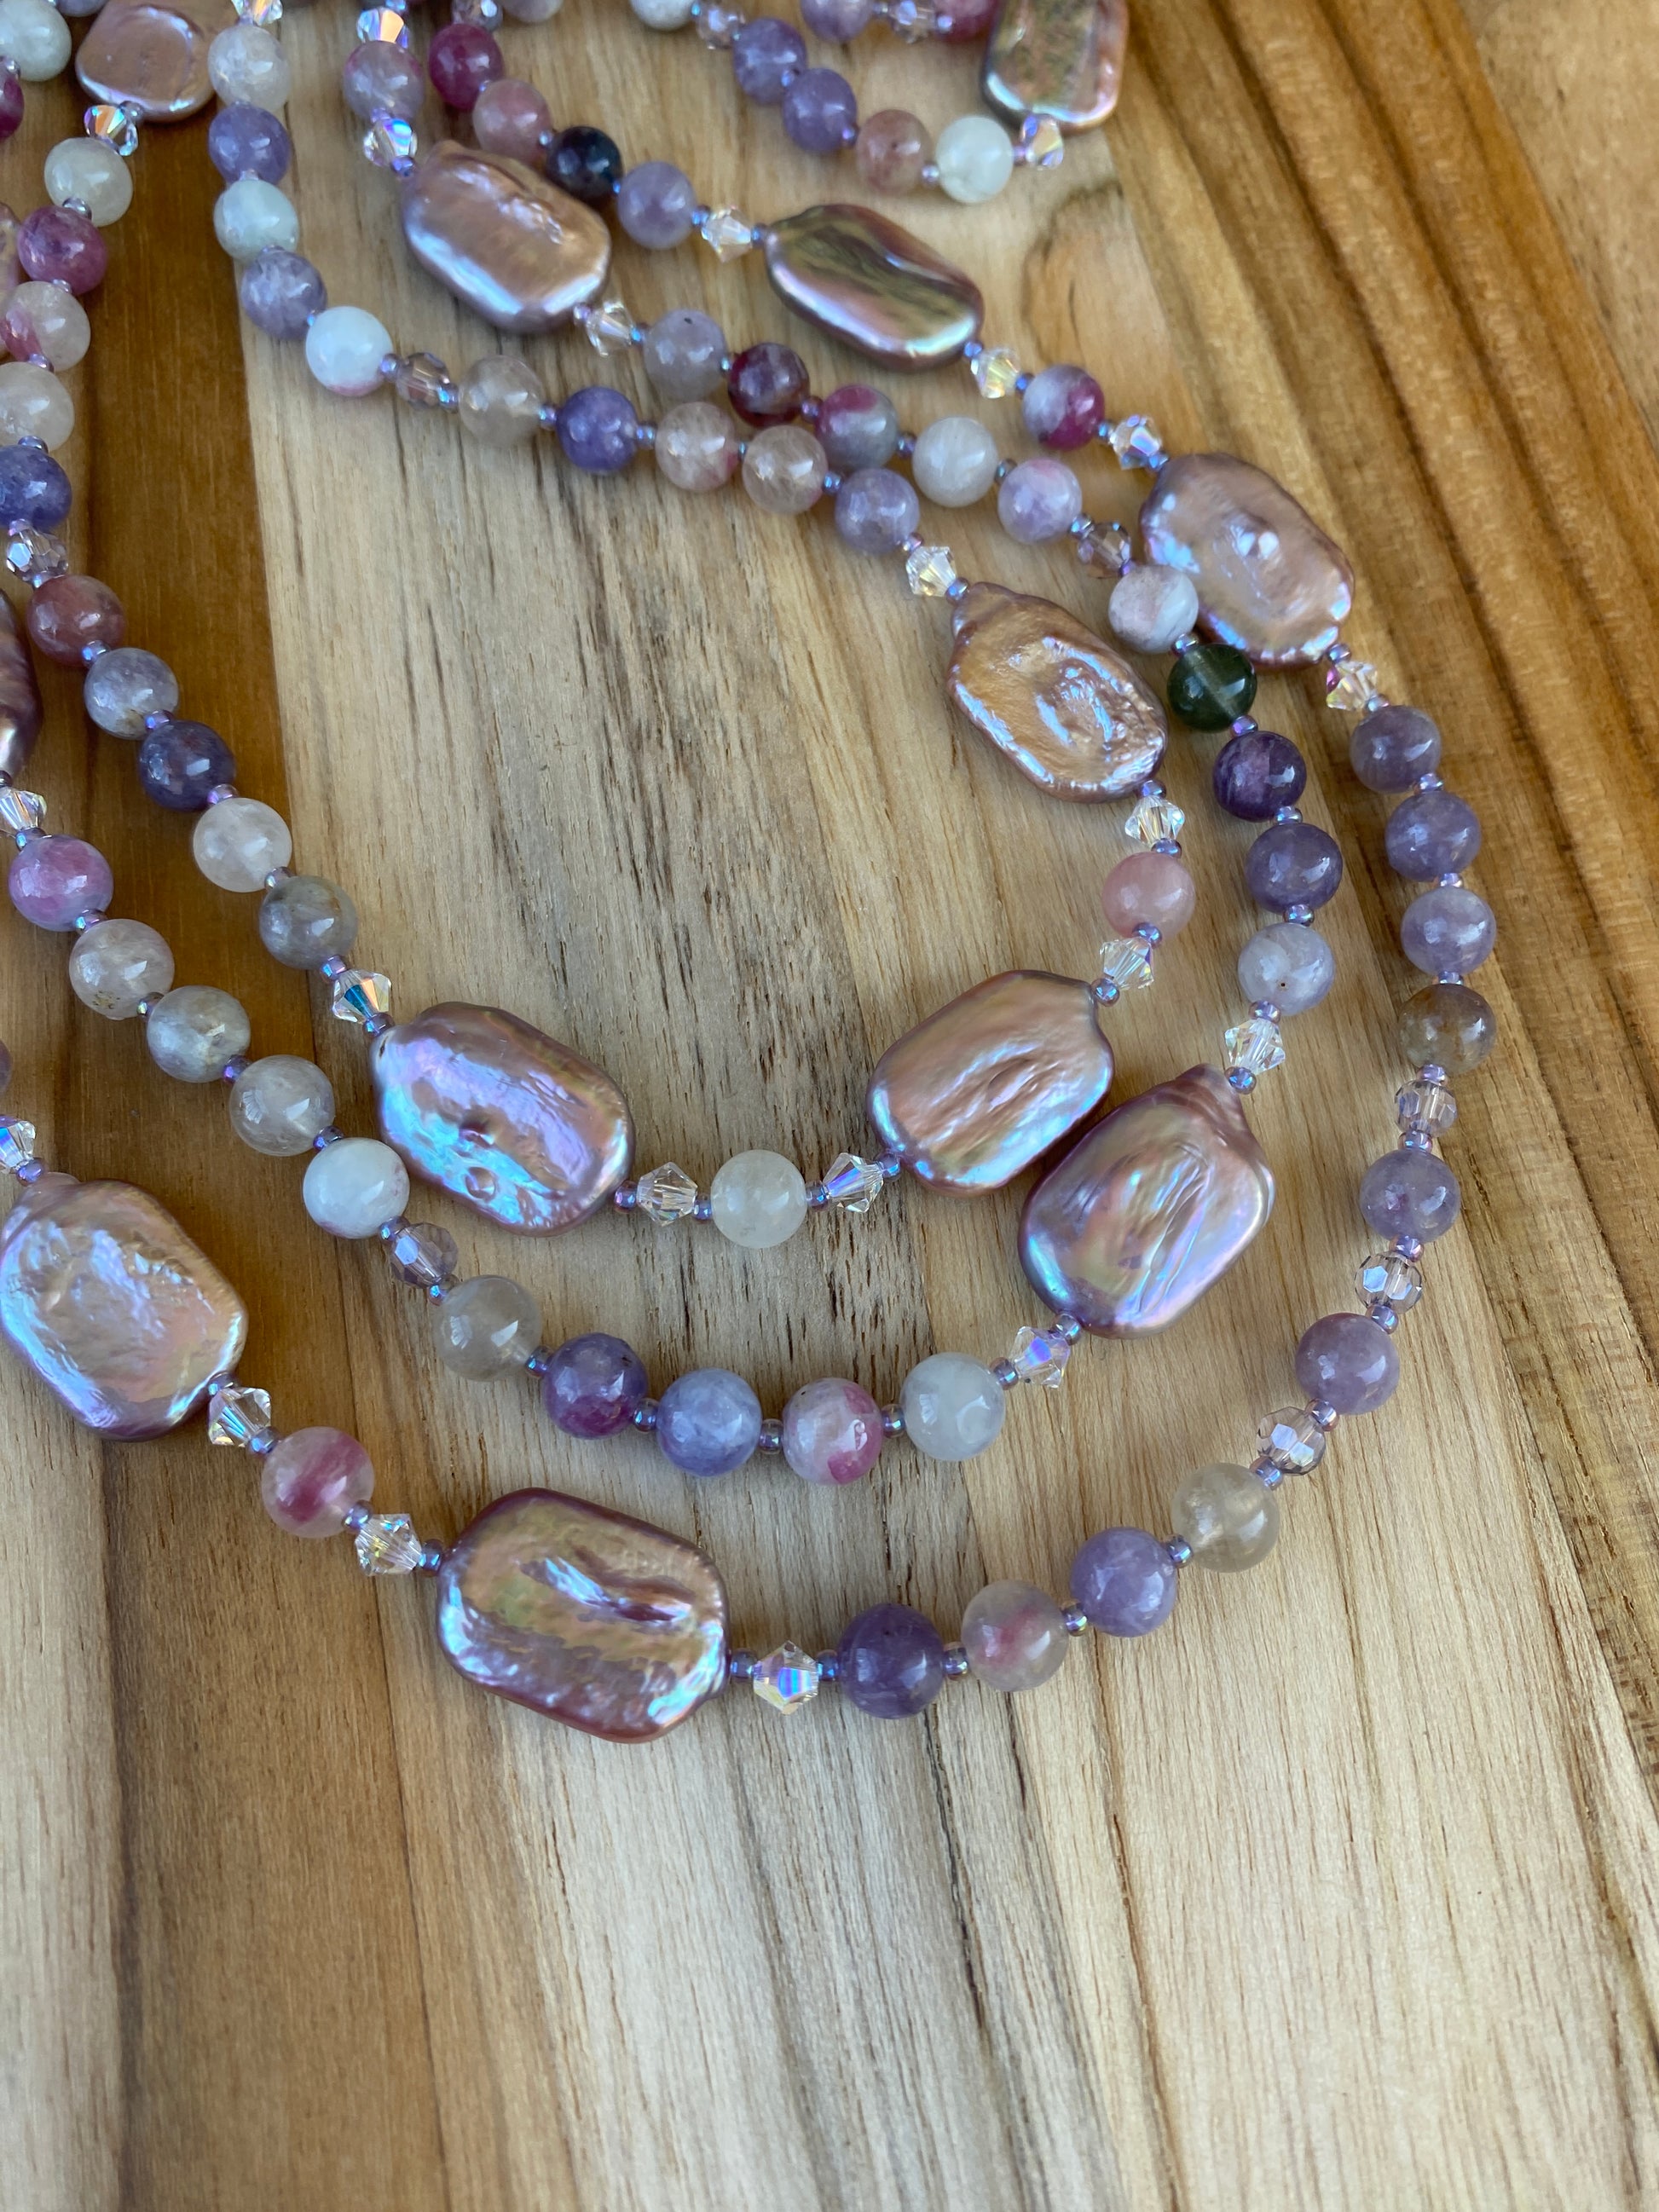 60" Extra Long Lavender Purple Beaded Biwa Pearl and Unicorn Stone Wraparound Style Necklace with Crystal Beads - My Urban Gems